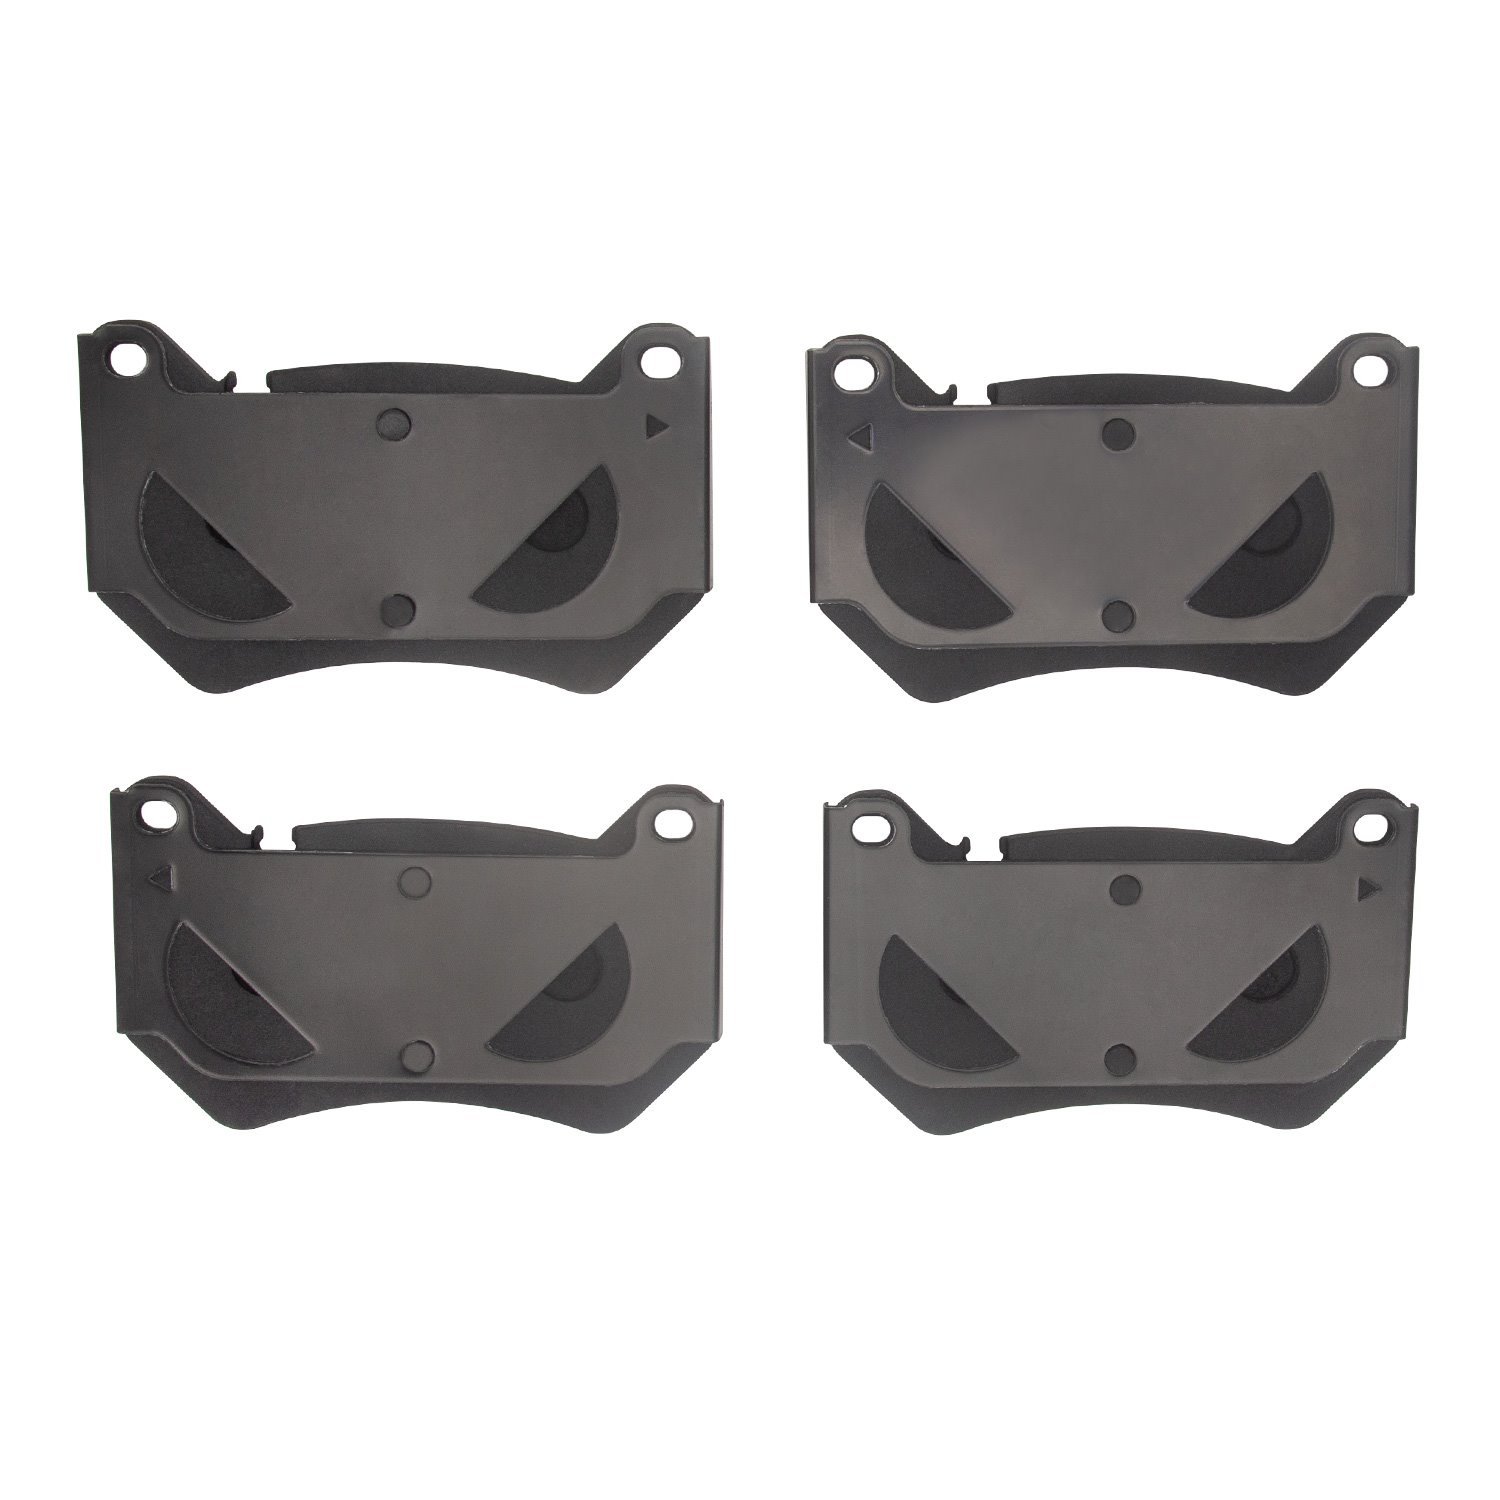 1310-2139-00 3000-Series Ceramic Brake Pads, Fits Select Audi/Volkswagen, Position: Front